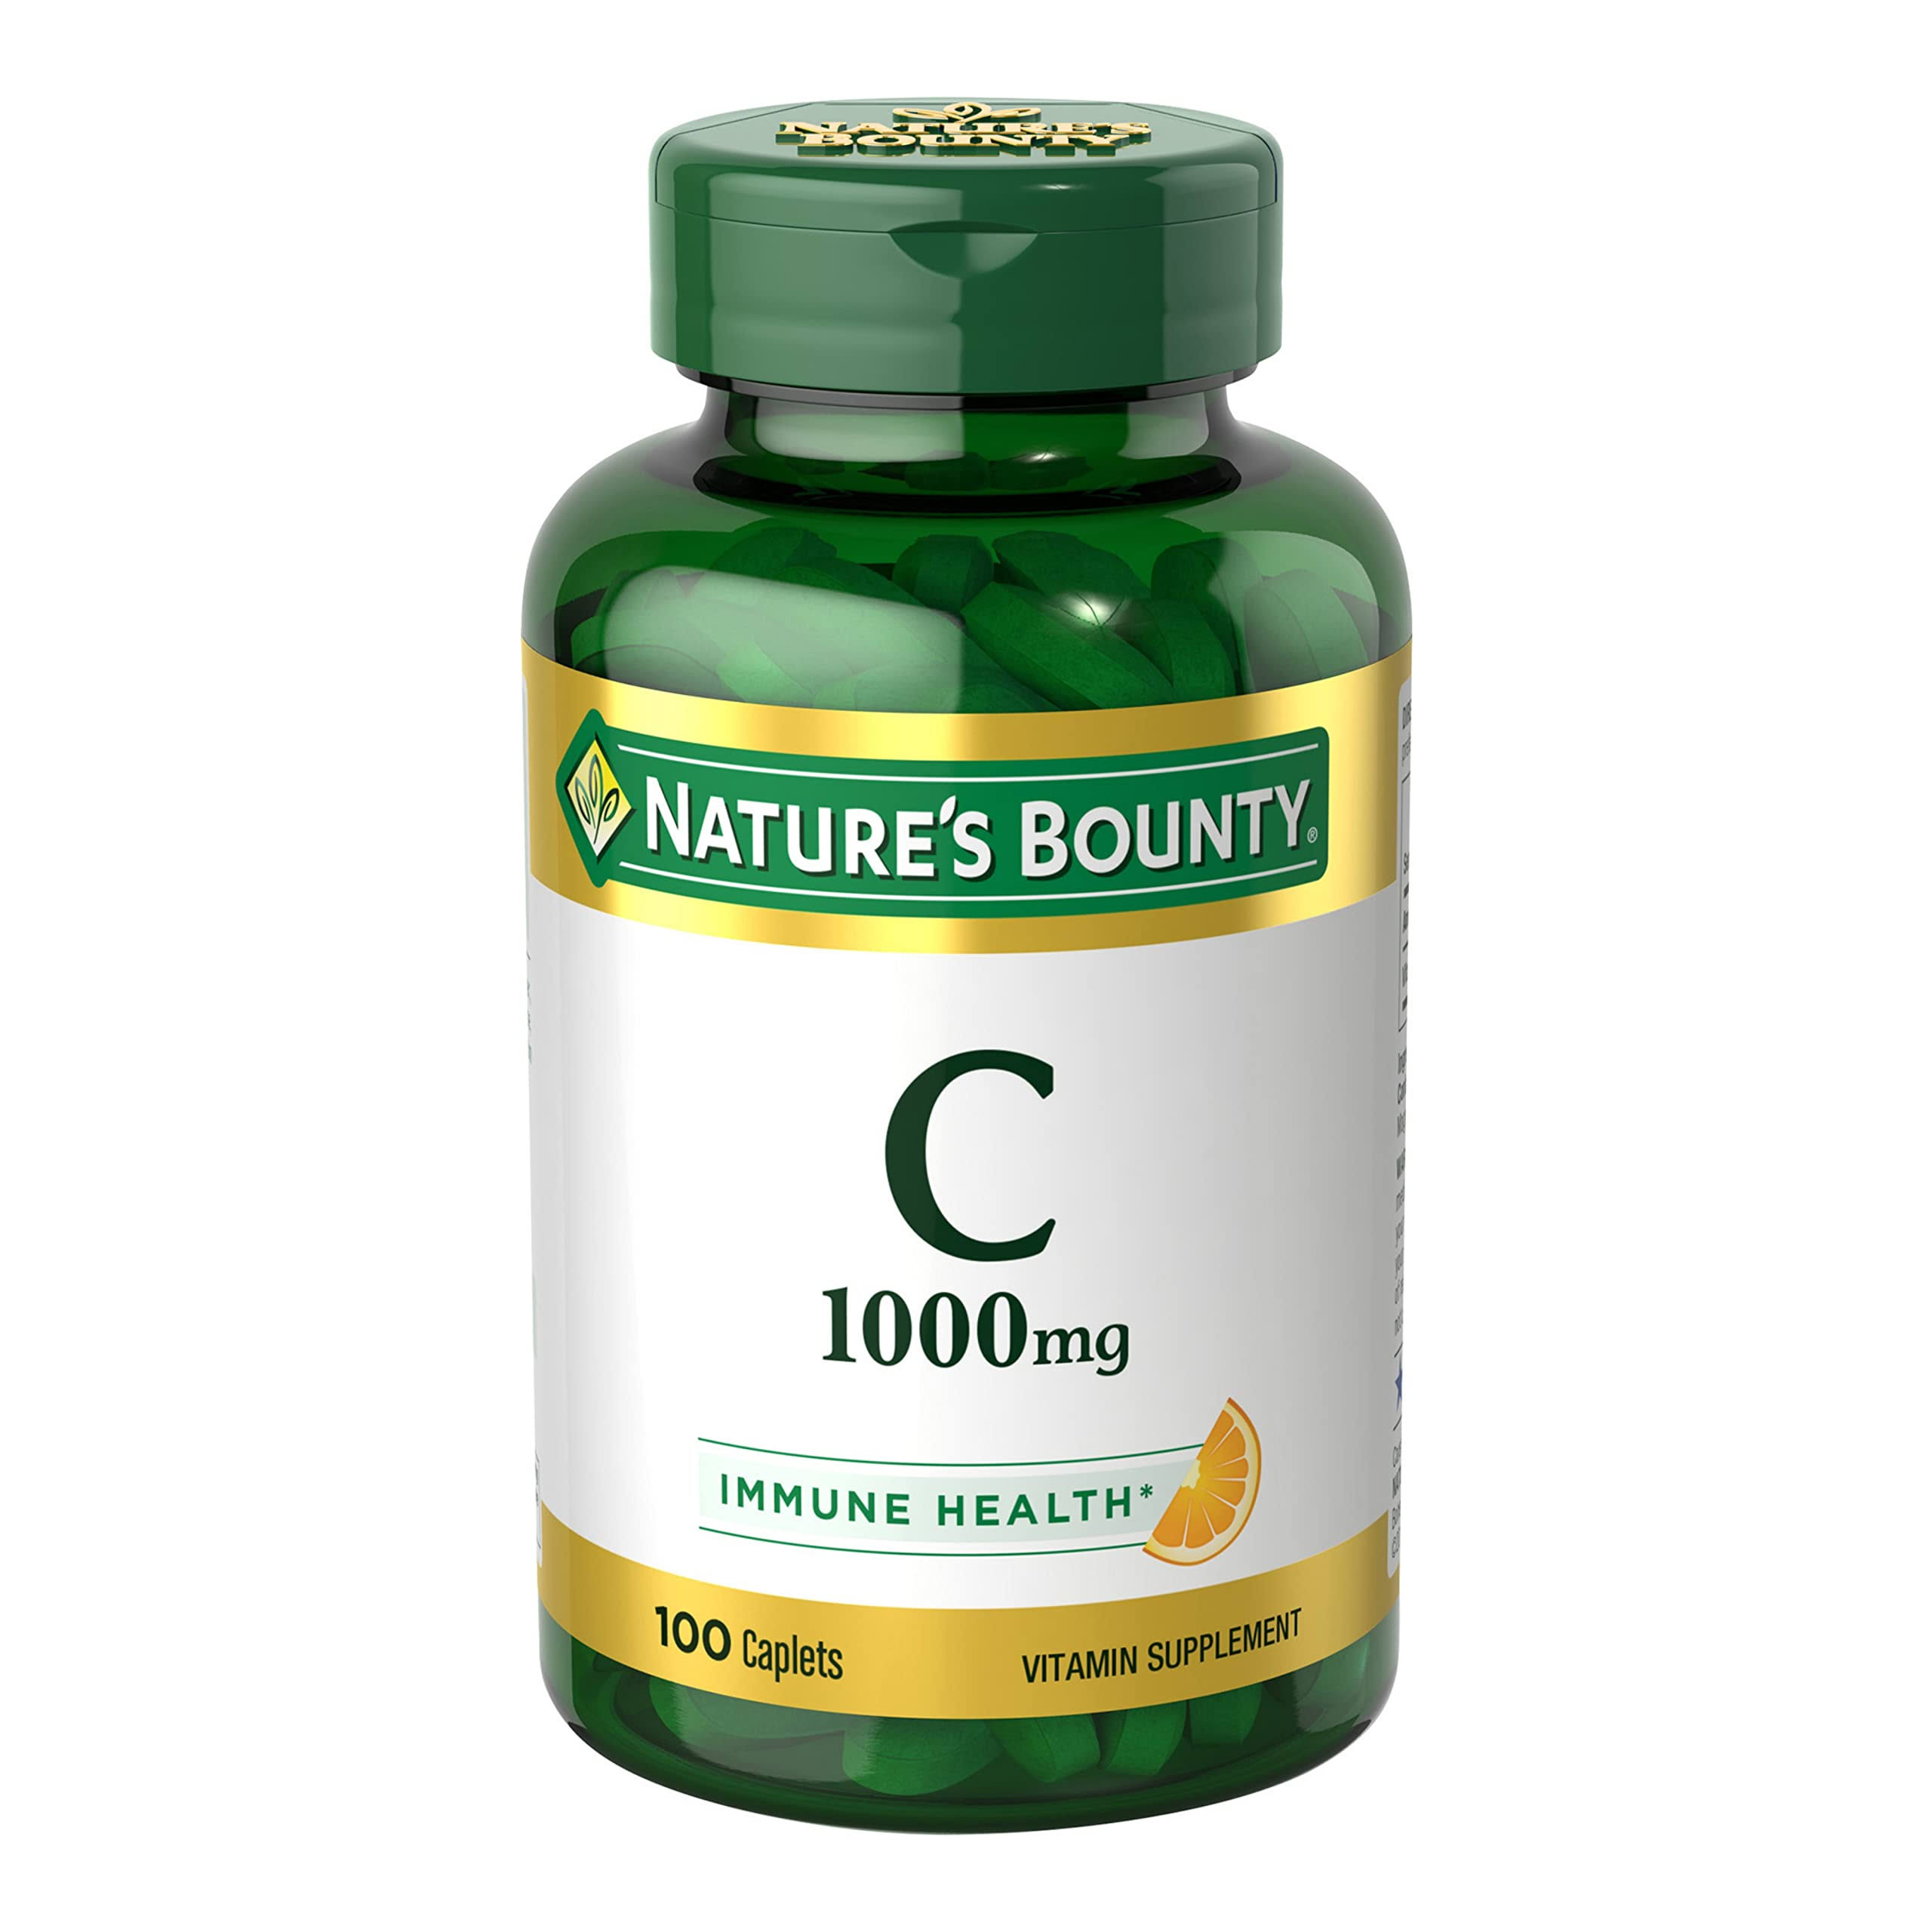 Nature's Bounty Pure Vitamin C - 100 Caplets